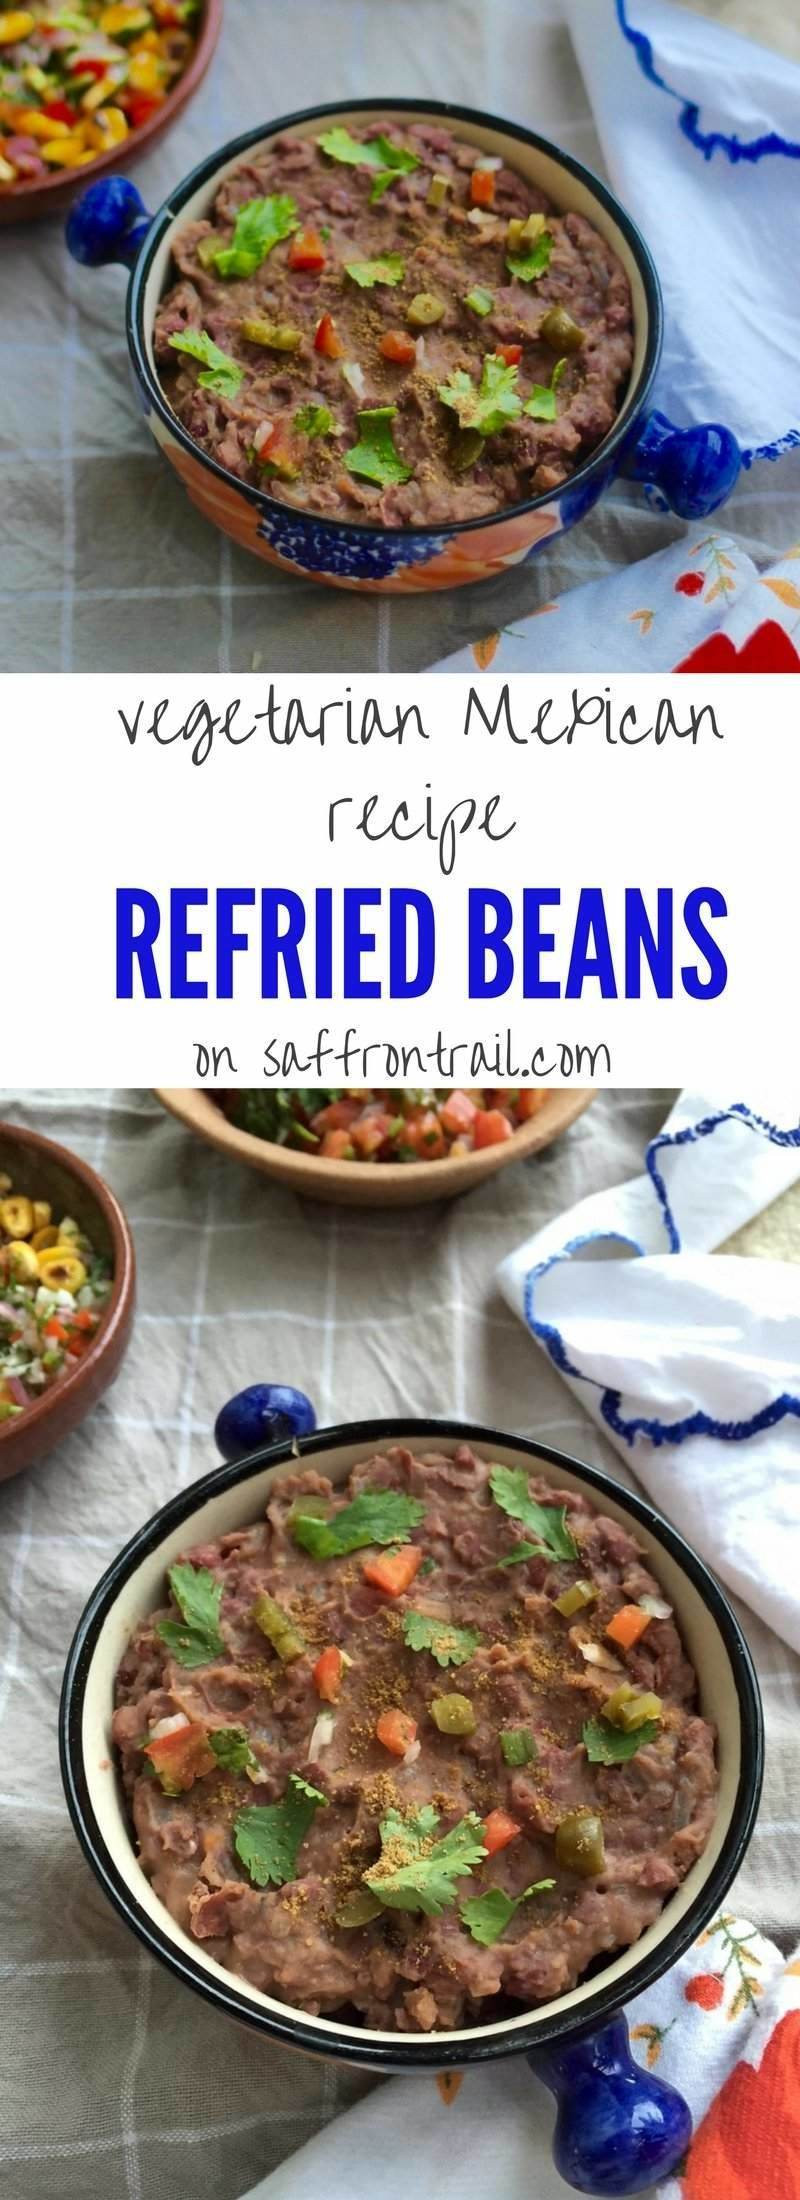 Vegan Refried Bean Recipes
 Refried Beans Frijoles Refritos Ve arian Mexican